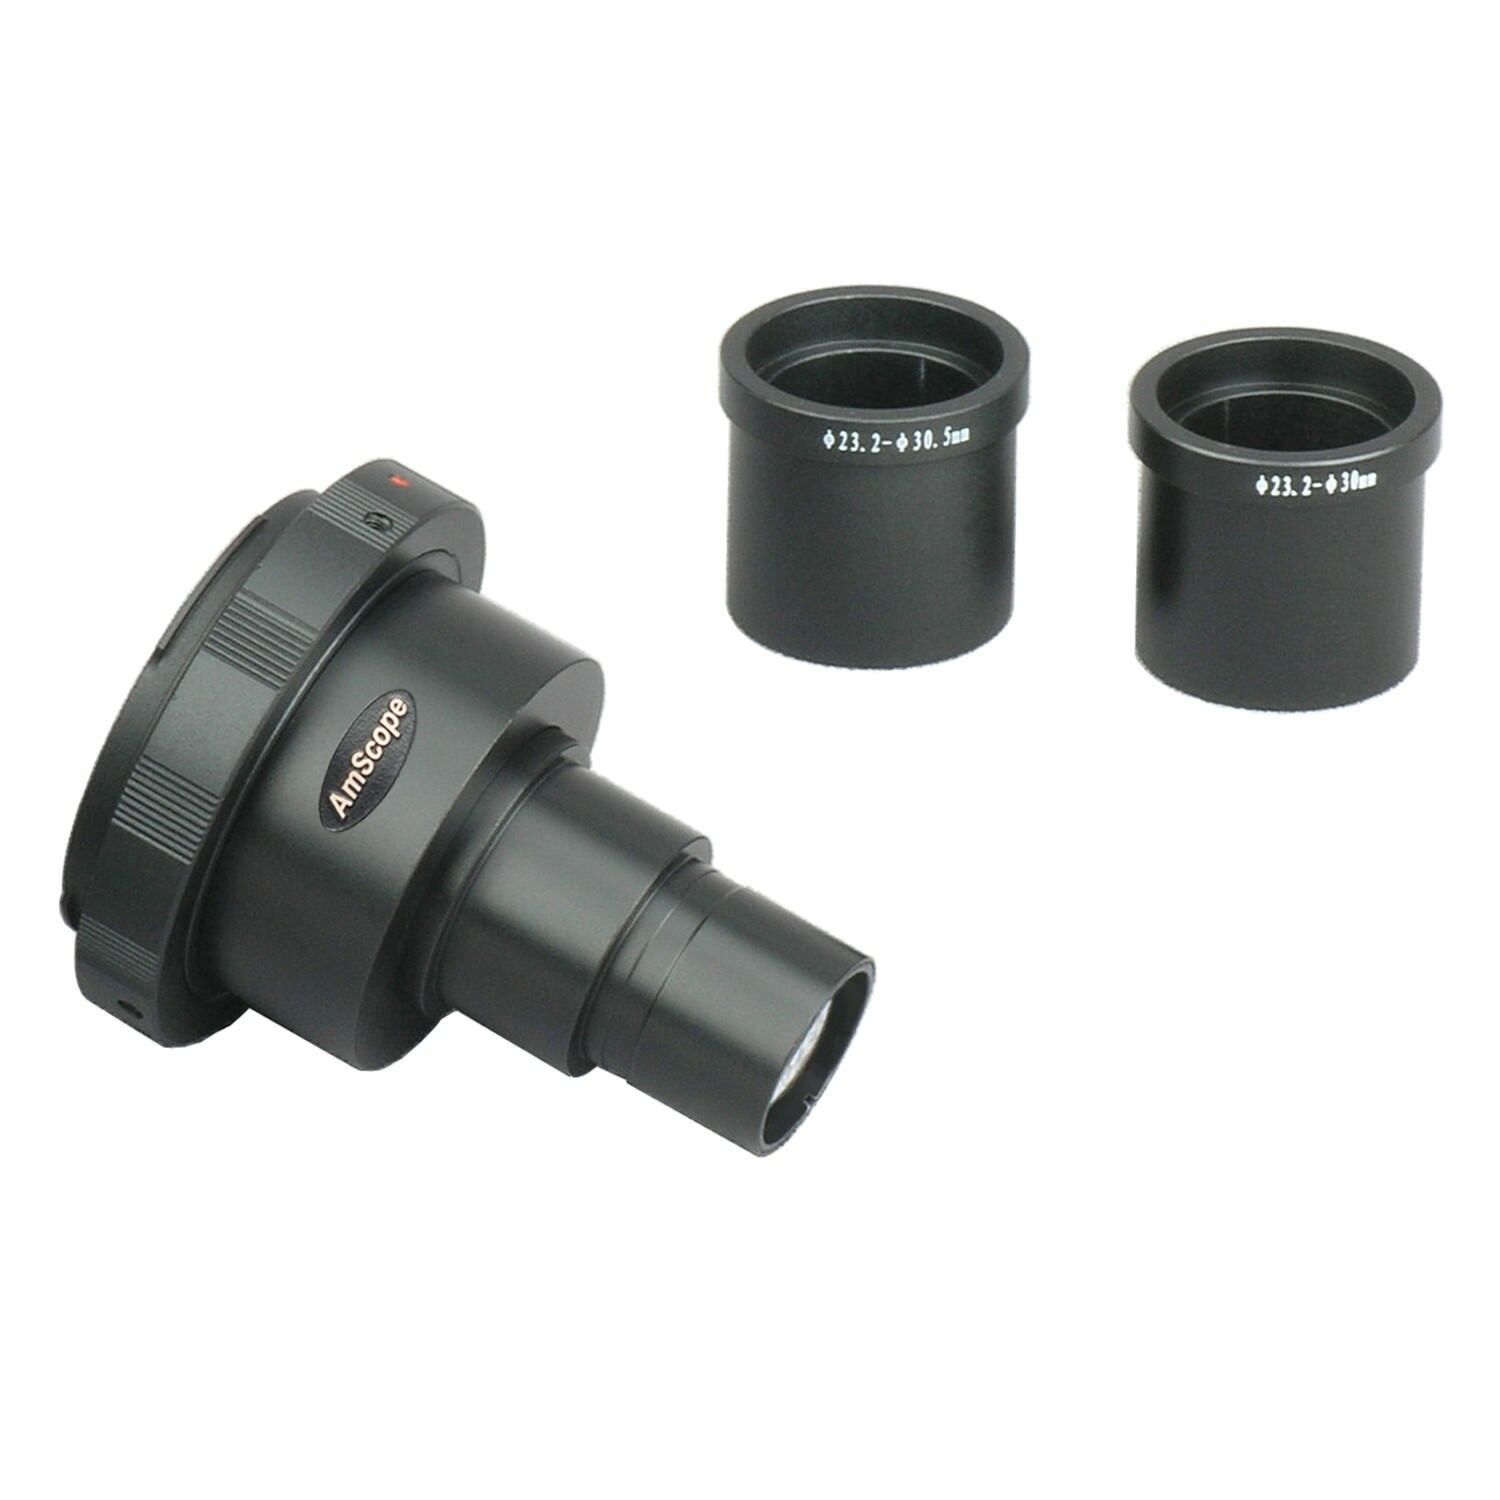 Amscope Canon Slr/dslr Camera Microscope Adapter 2x Magnification W 2 Adapters